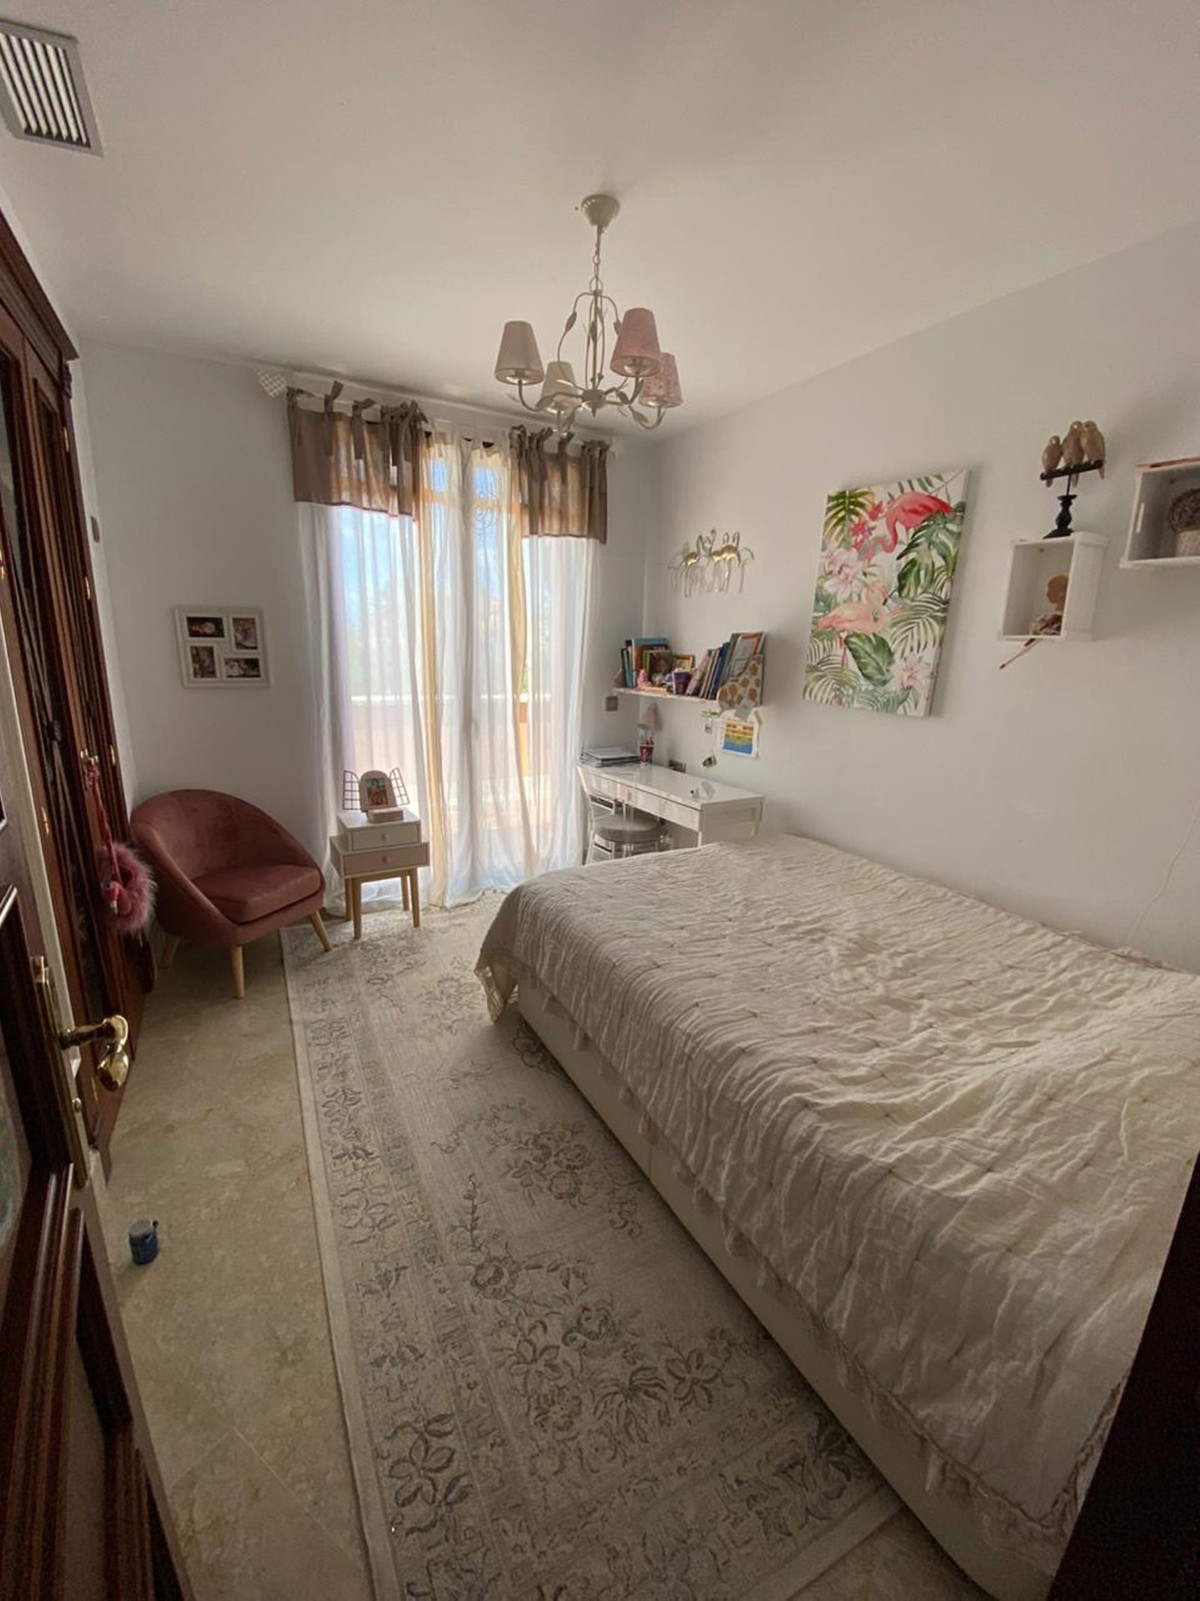 3 bedroom Apartment For Sale in San Pedro de Alcántara, Málaga - thumb 36